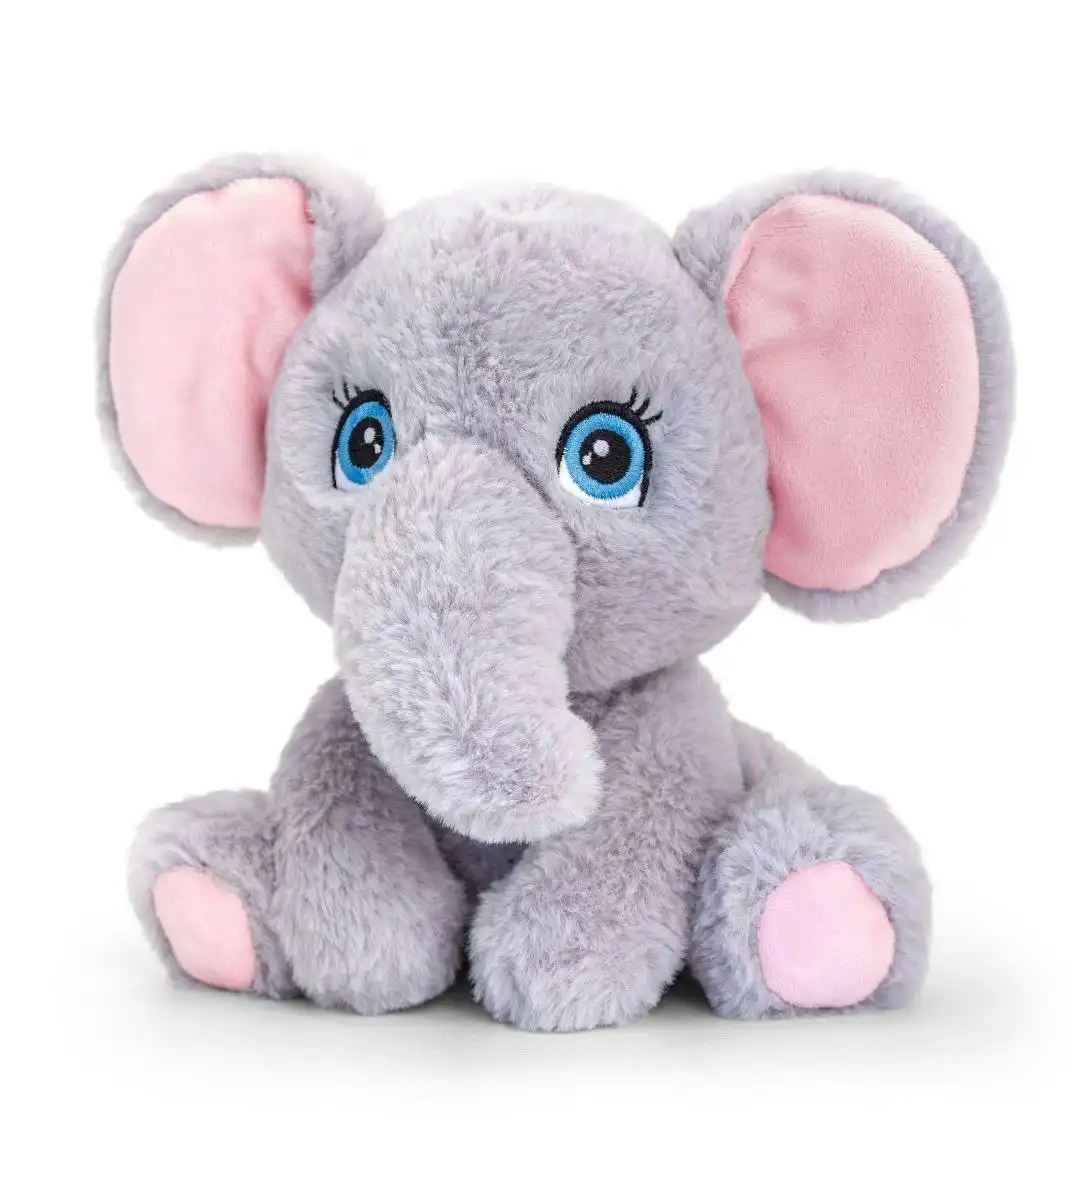 Adoptable World - Plush Elephant by Keeleco 25cm